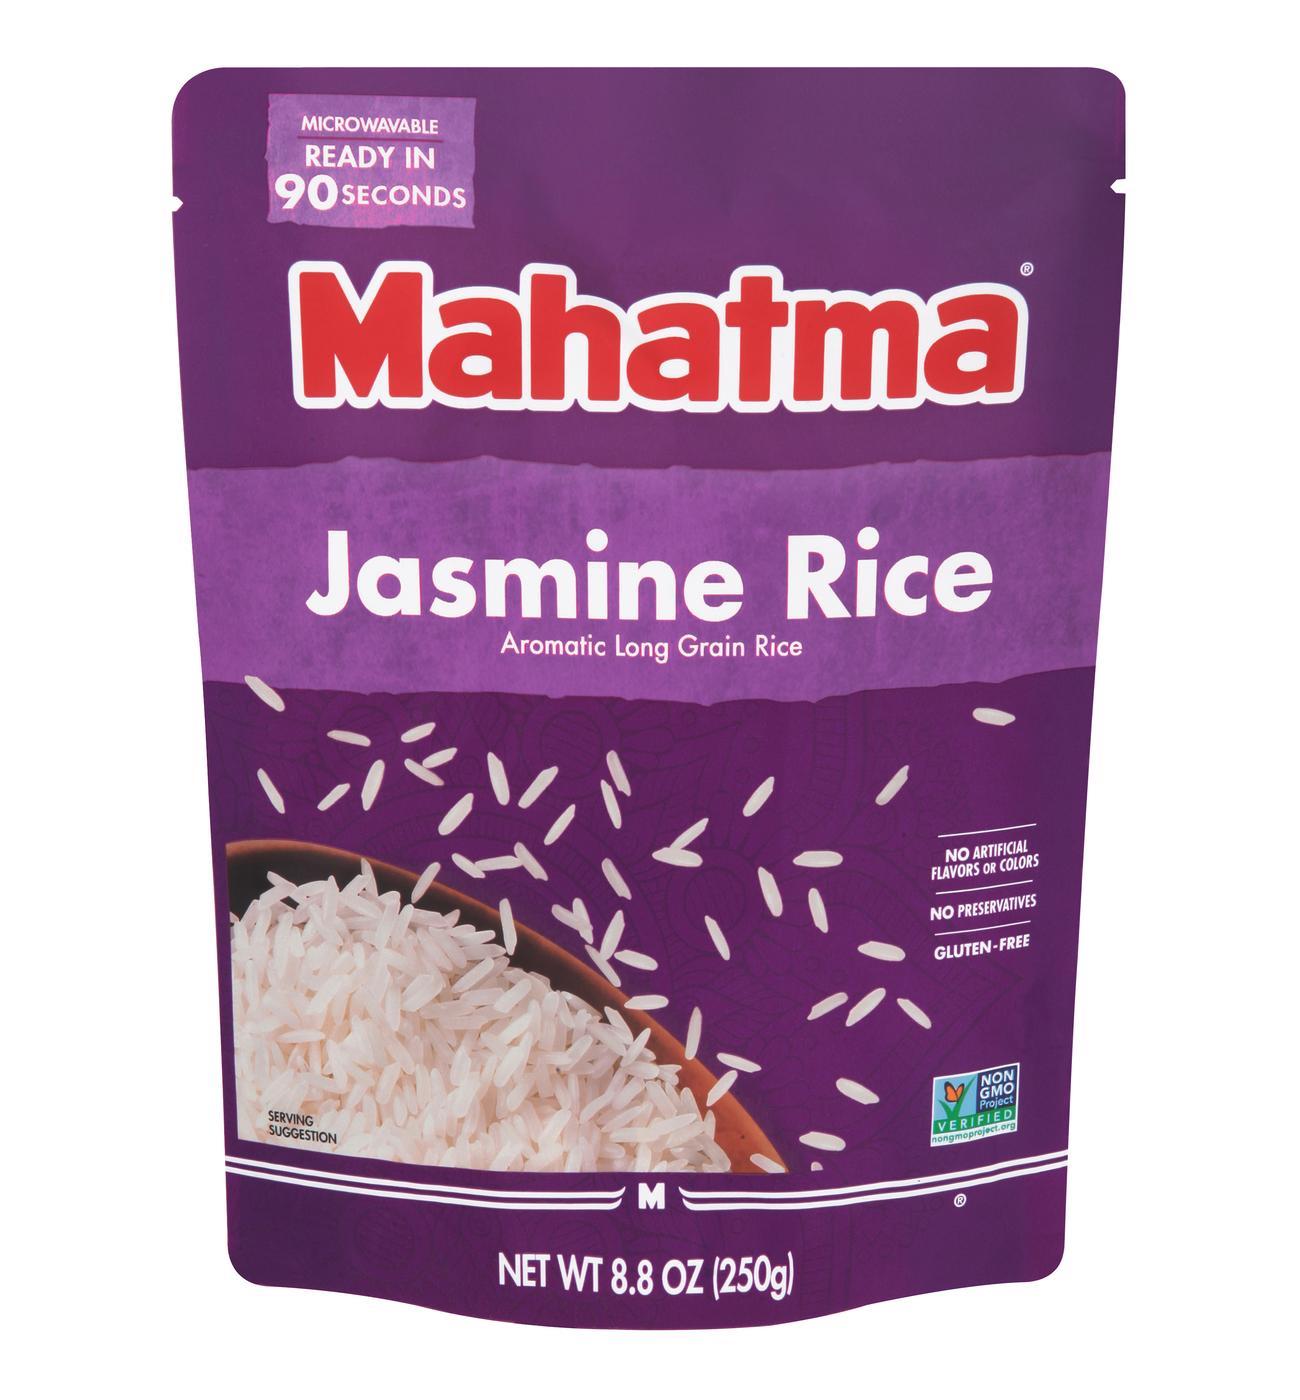 Mahatma Jasmine Aromatic Long Grain Rice; image 1 of 6